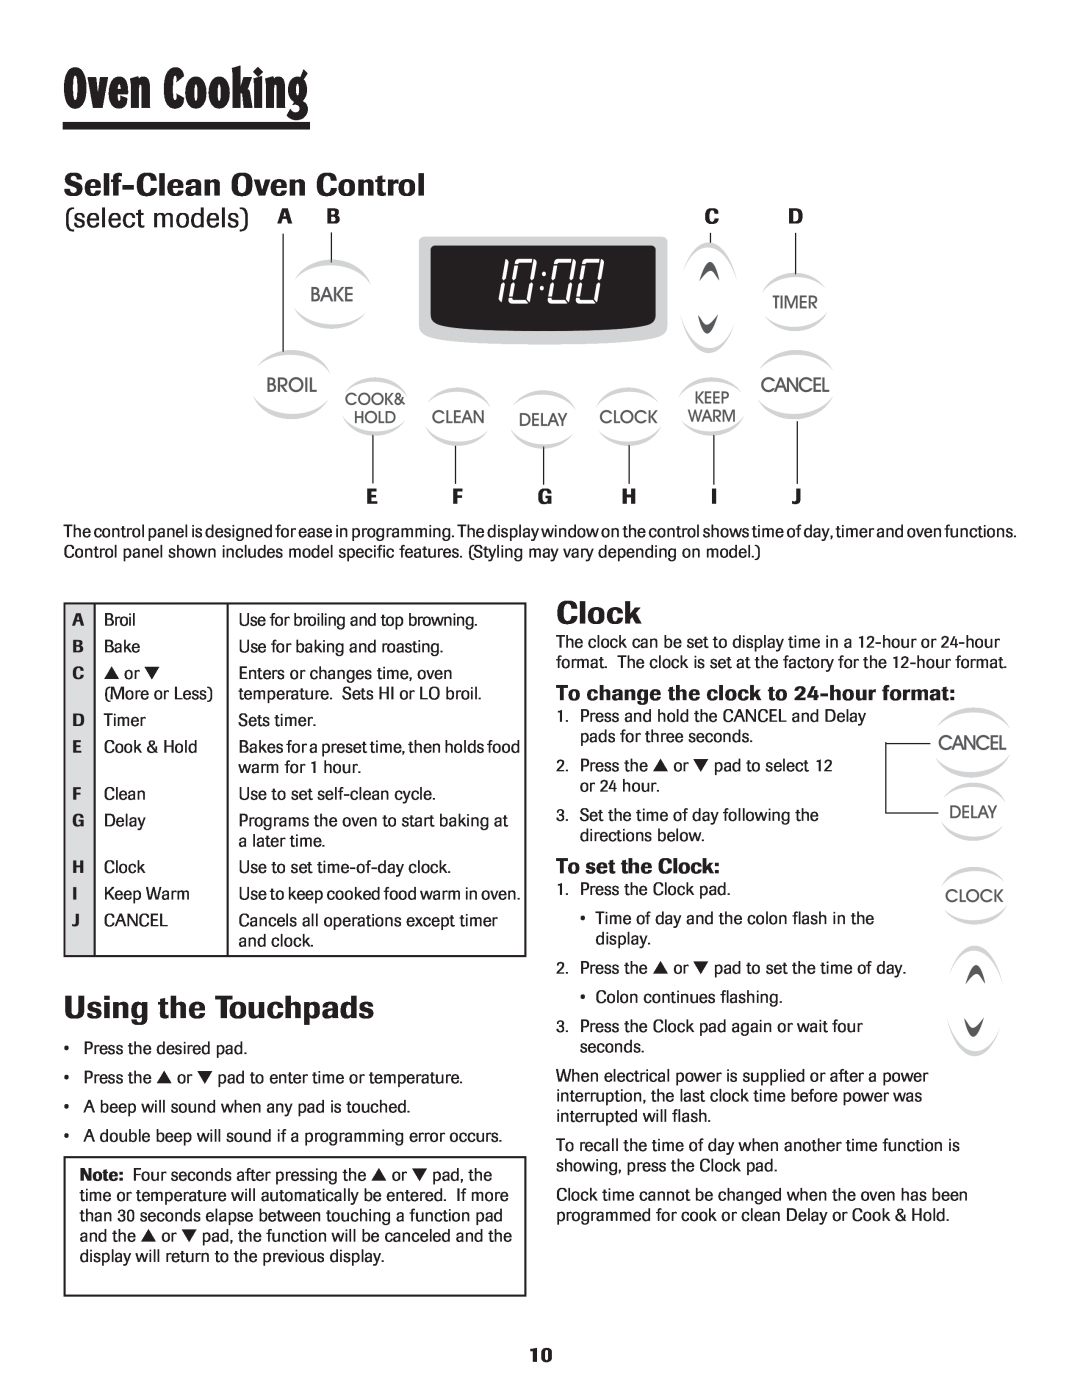 Maytag warranty Self-CleanOven Control, Clock, select models A B, E F G H I J, To change the clock to 24-hourformat 